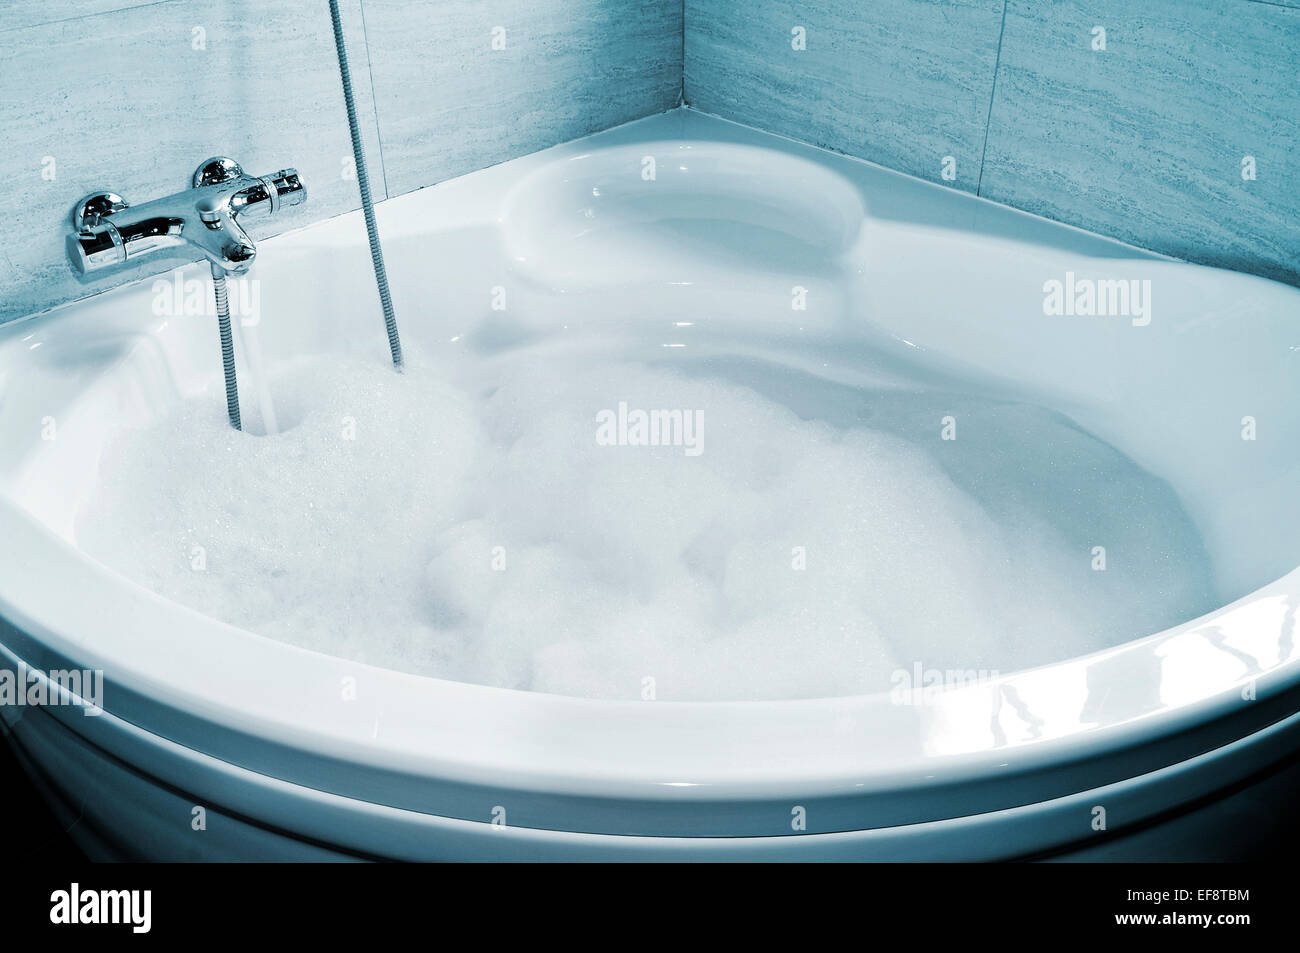 a whirlpool bath full of foam ready to take a bath Stock Photo